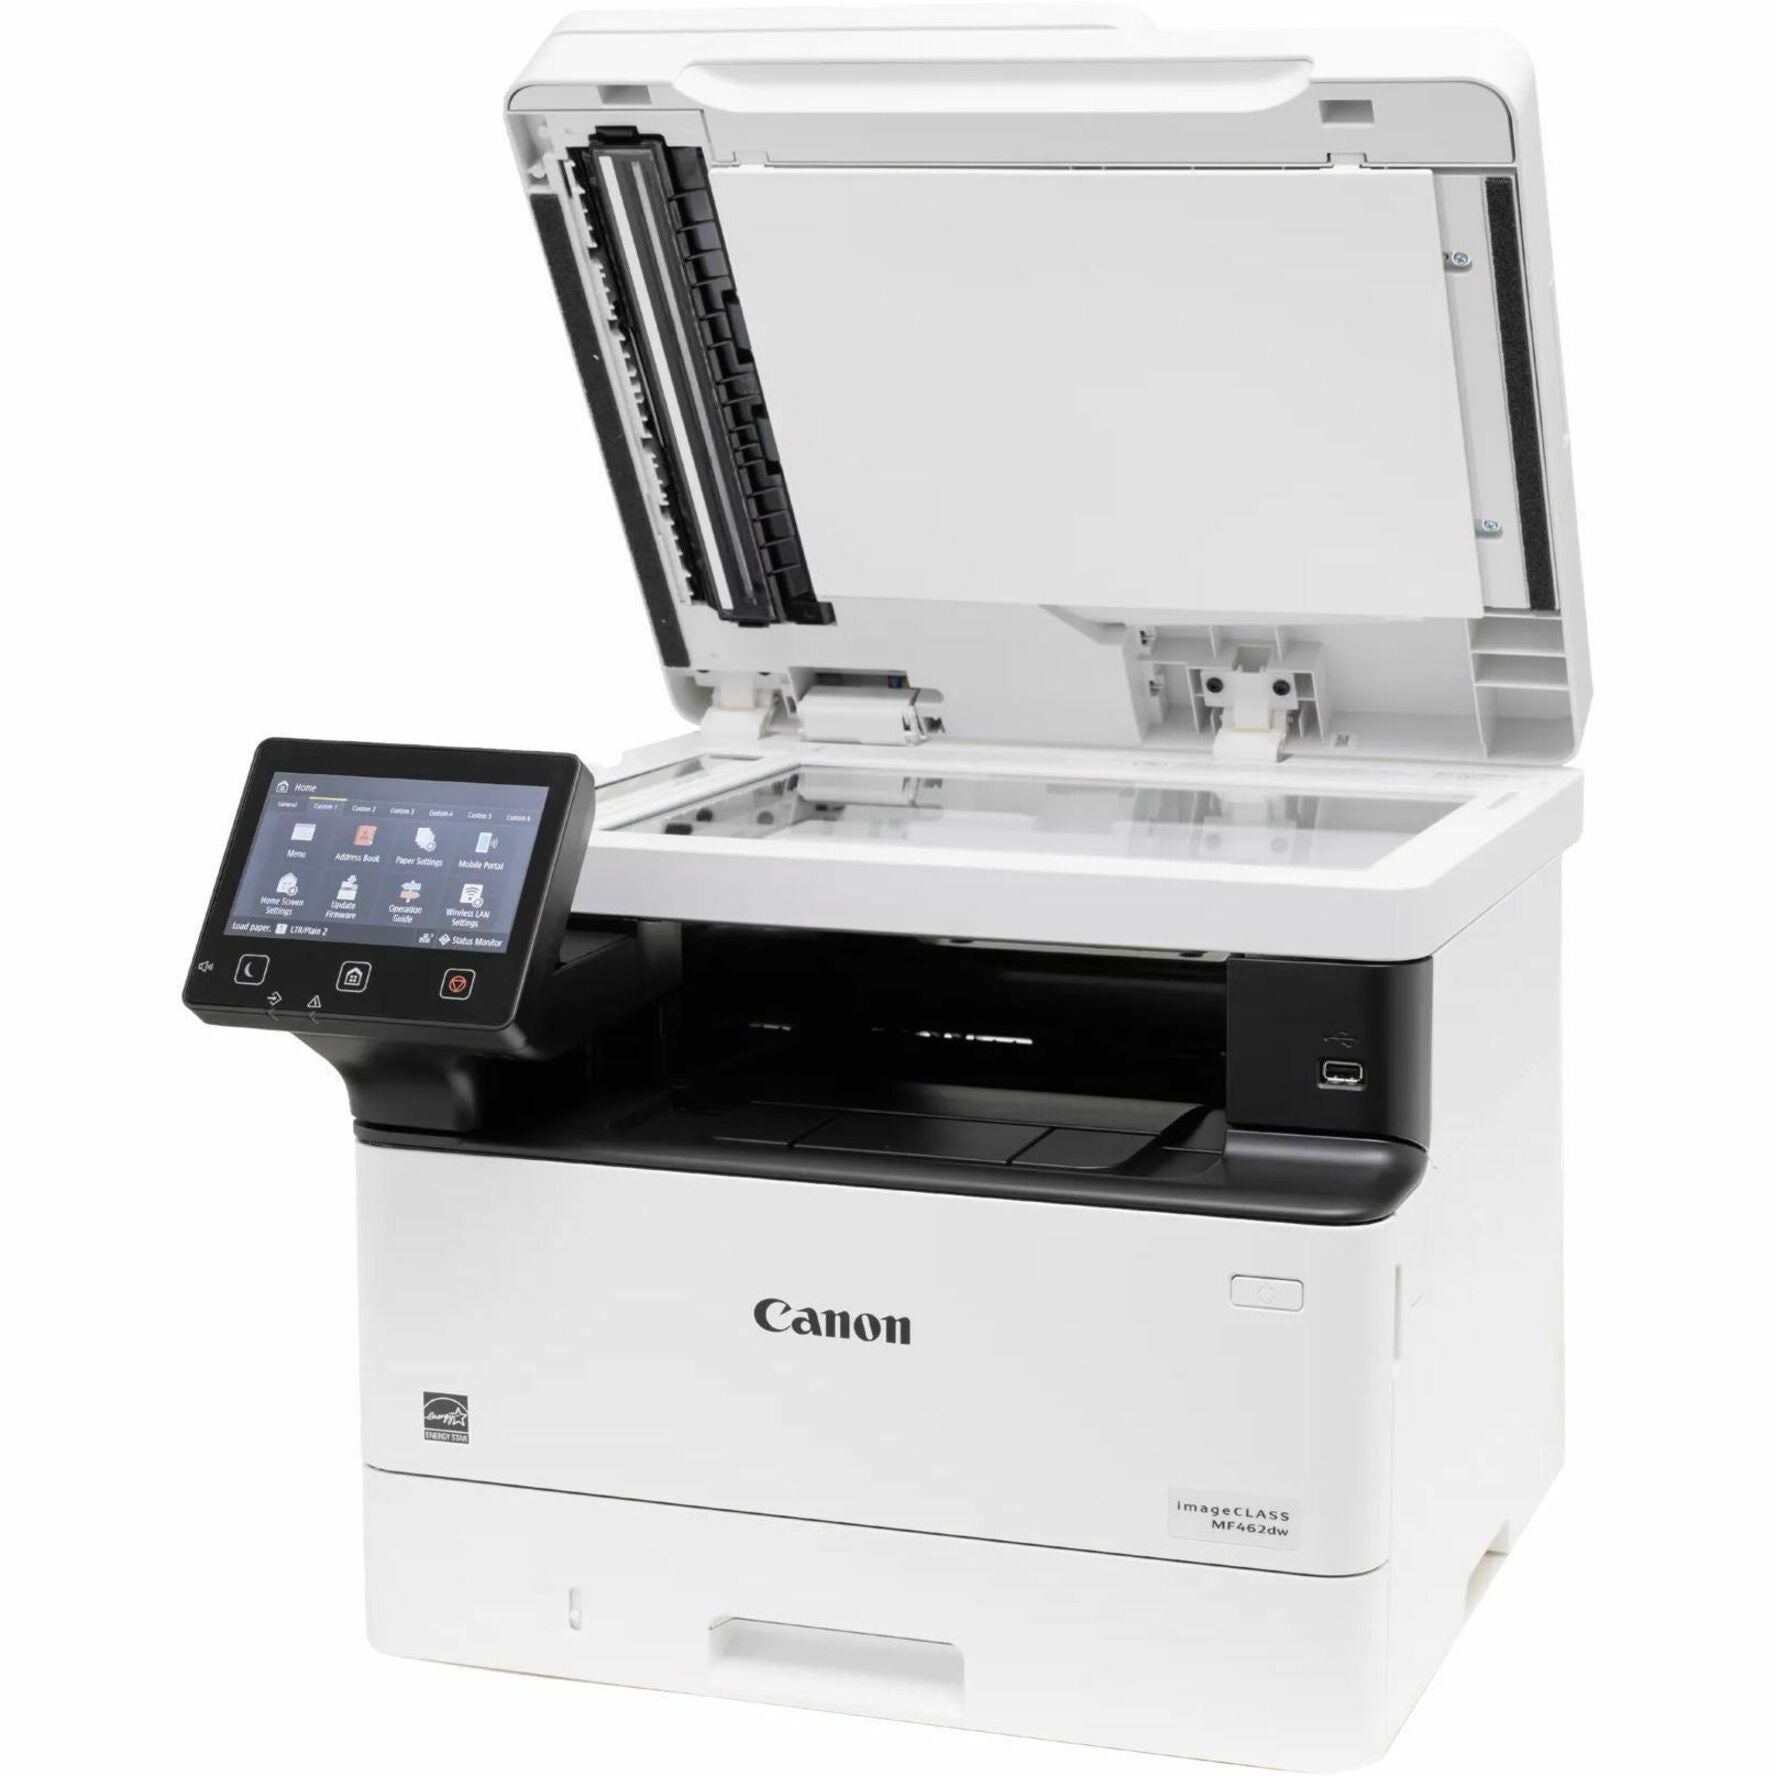 Canon 5951C015 imageCLASS MF462dw All-in-One Wireless Duplex Laser Printer, Monochrome, 37 ppm, 1200 x 1200 dpi